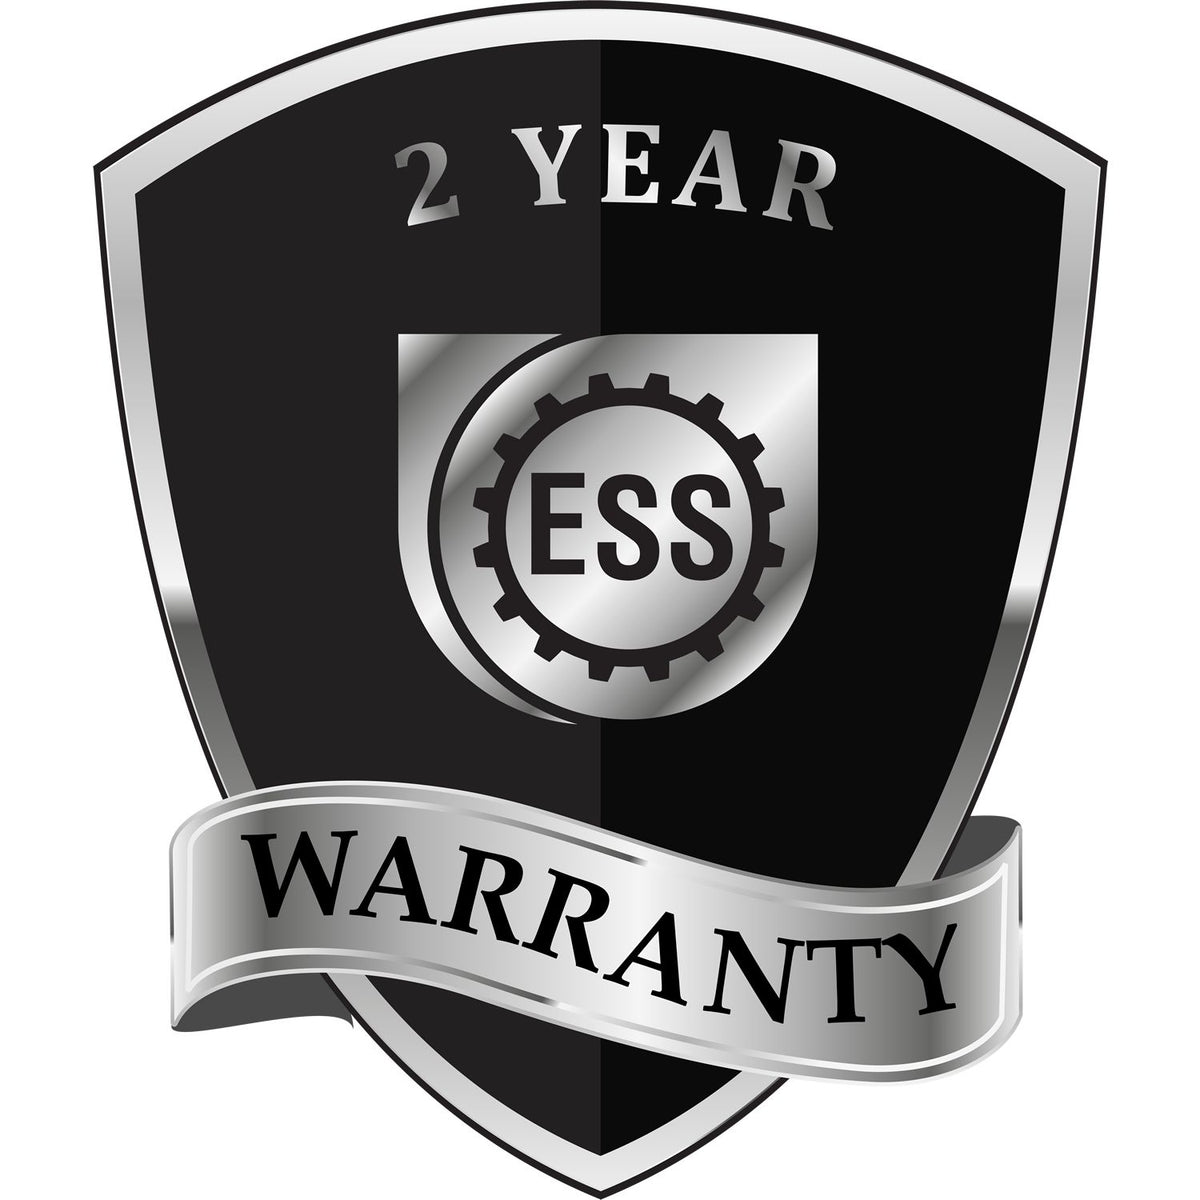 A black and silver badge or emblem showing warranty information for the Gift Kansas Land Surveyor Seal